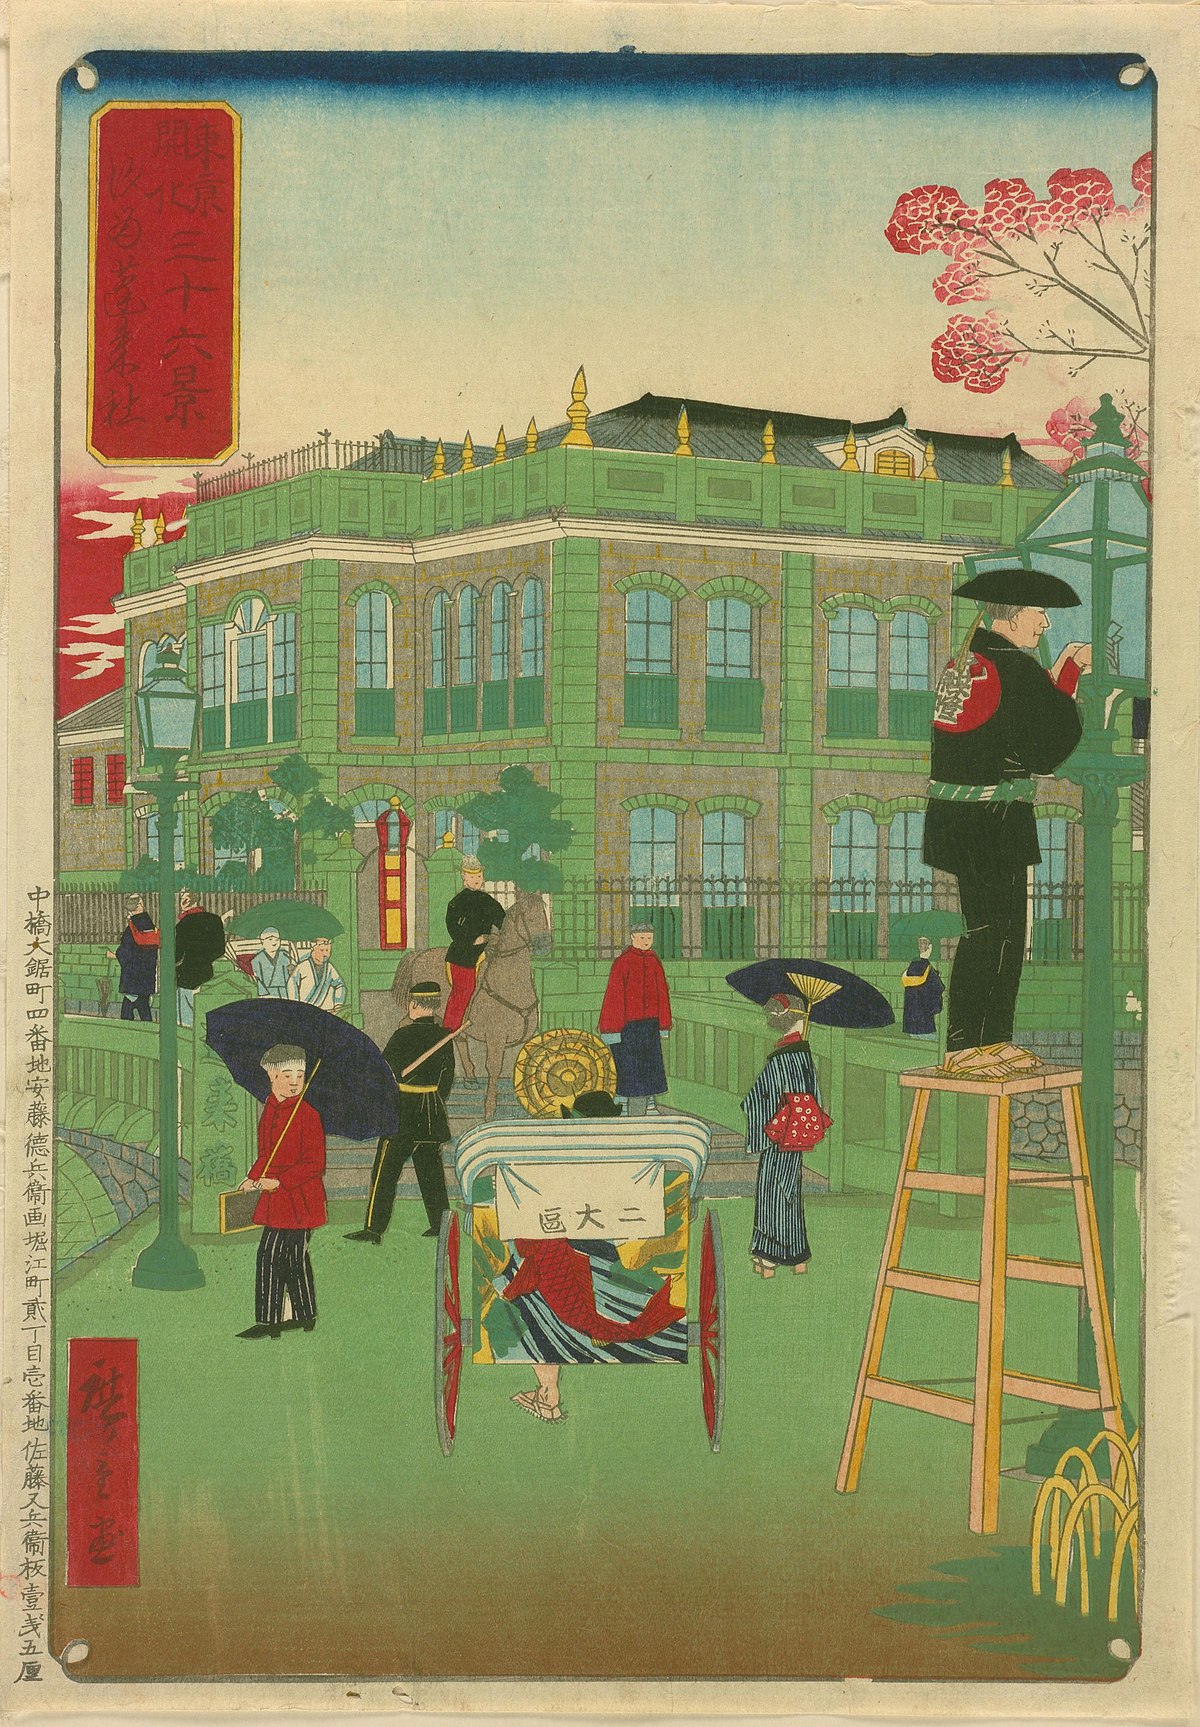 File:NDL-DC 2542937 22-Utagawa Hiroshige III-東京開化三十六景 